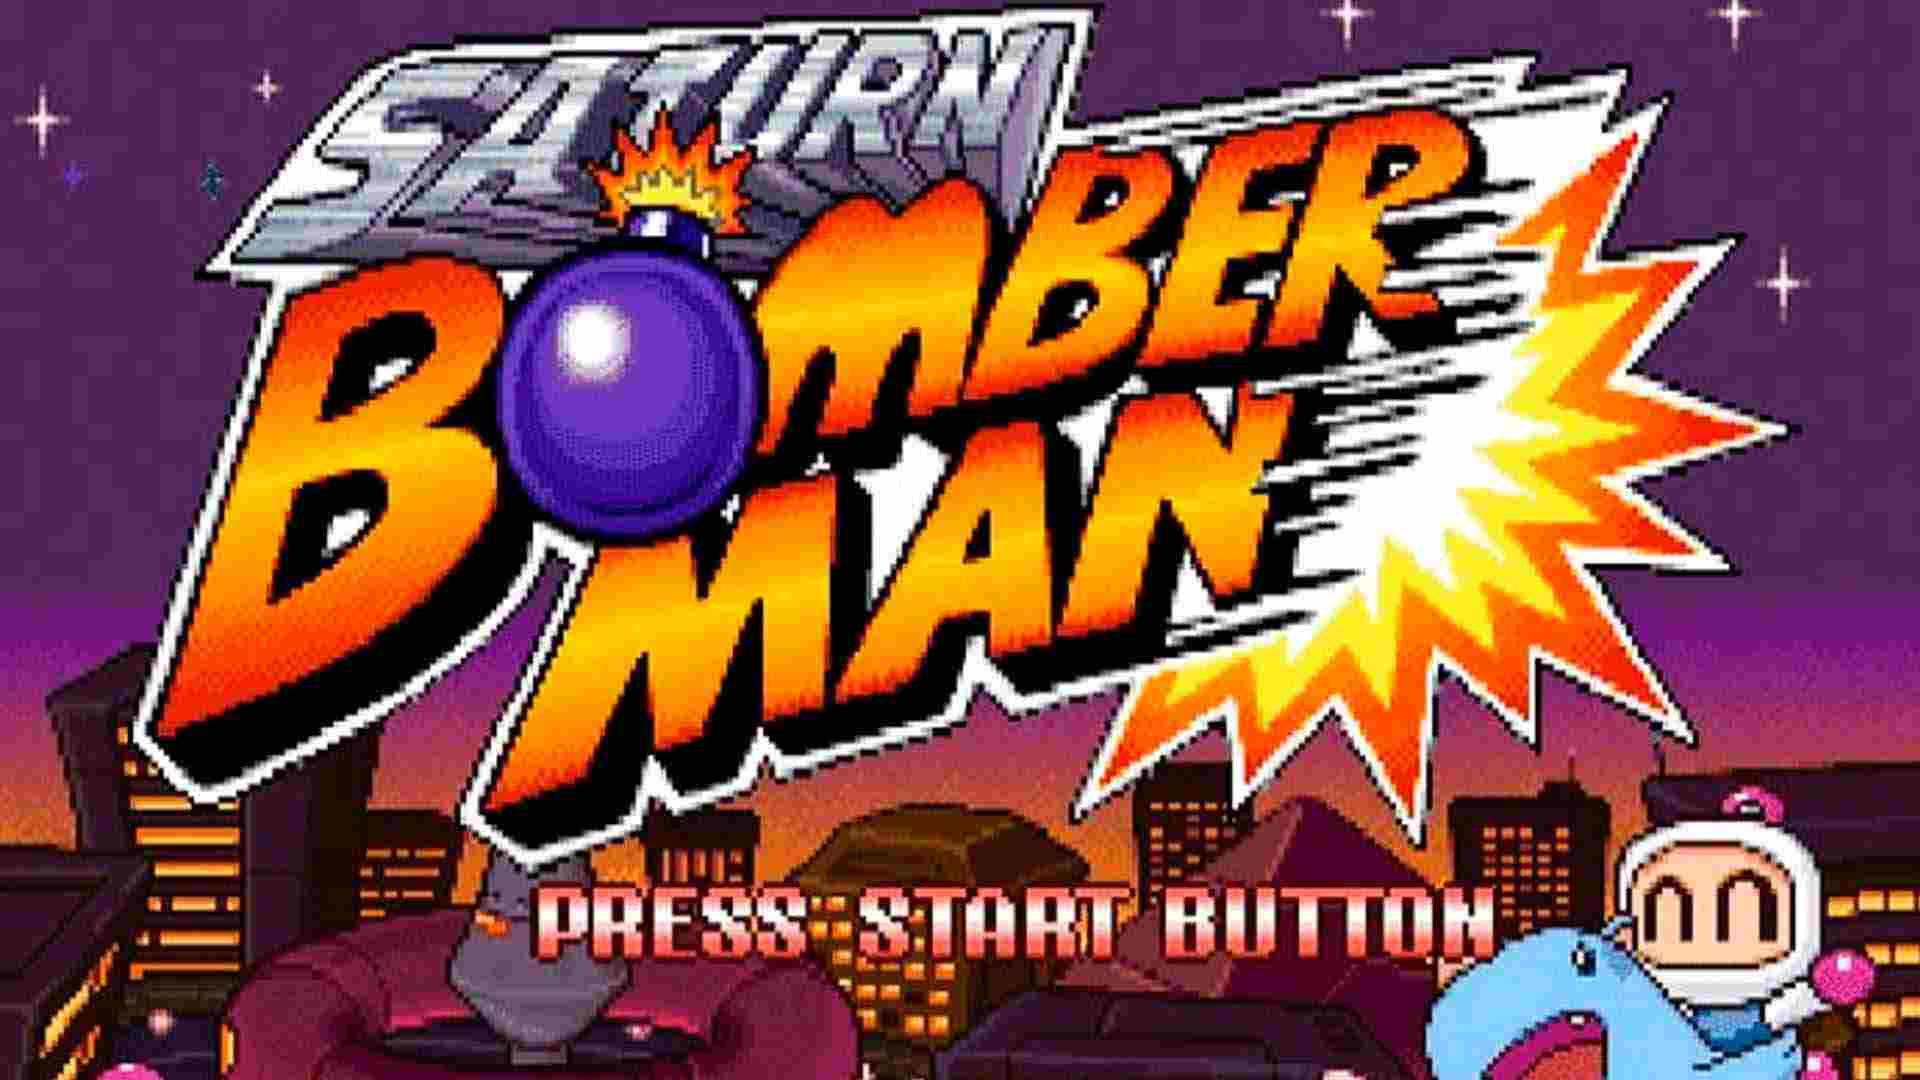 SNES Super Bomberman 4 - Zerando sem morrer 1 